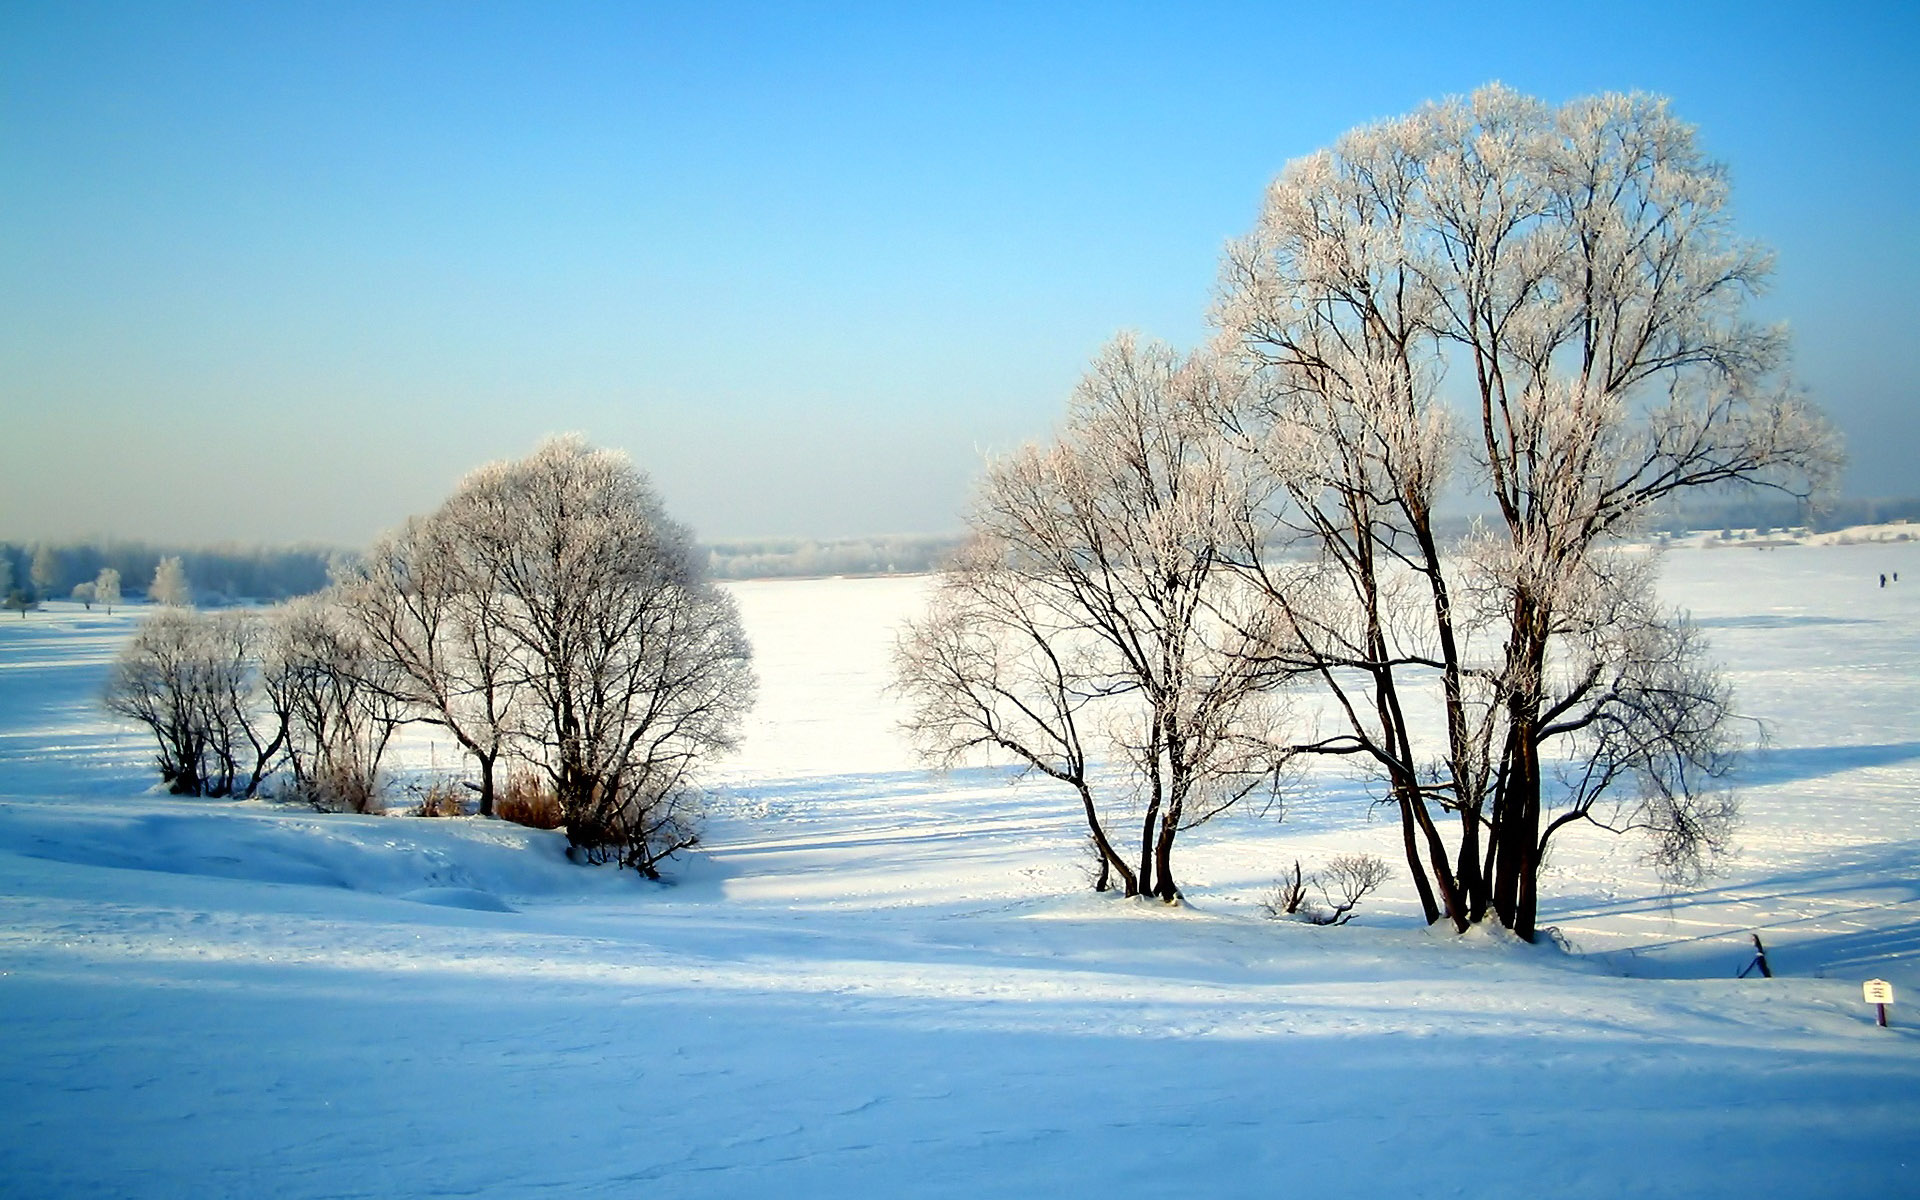 19201200 Widescreen Winter Snow Scenes - Dreamy Winter Snow